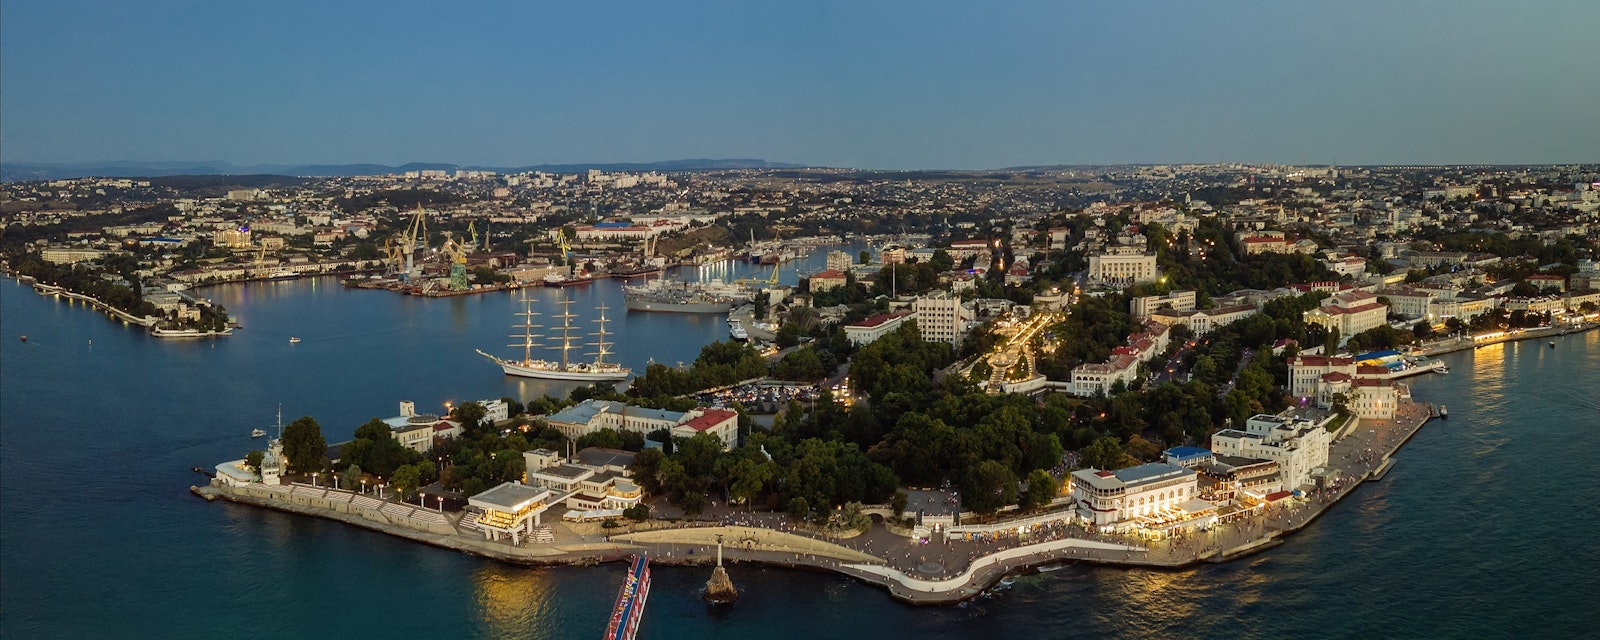 Evening,Sevastopol,Panorama,,Aerial,View,Of,The,Sevastopol,Bay,And